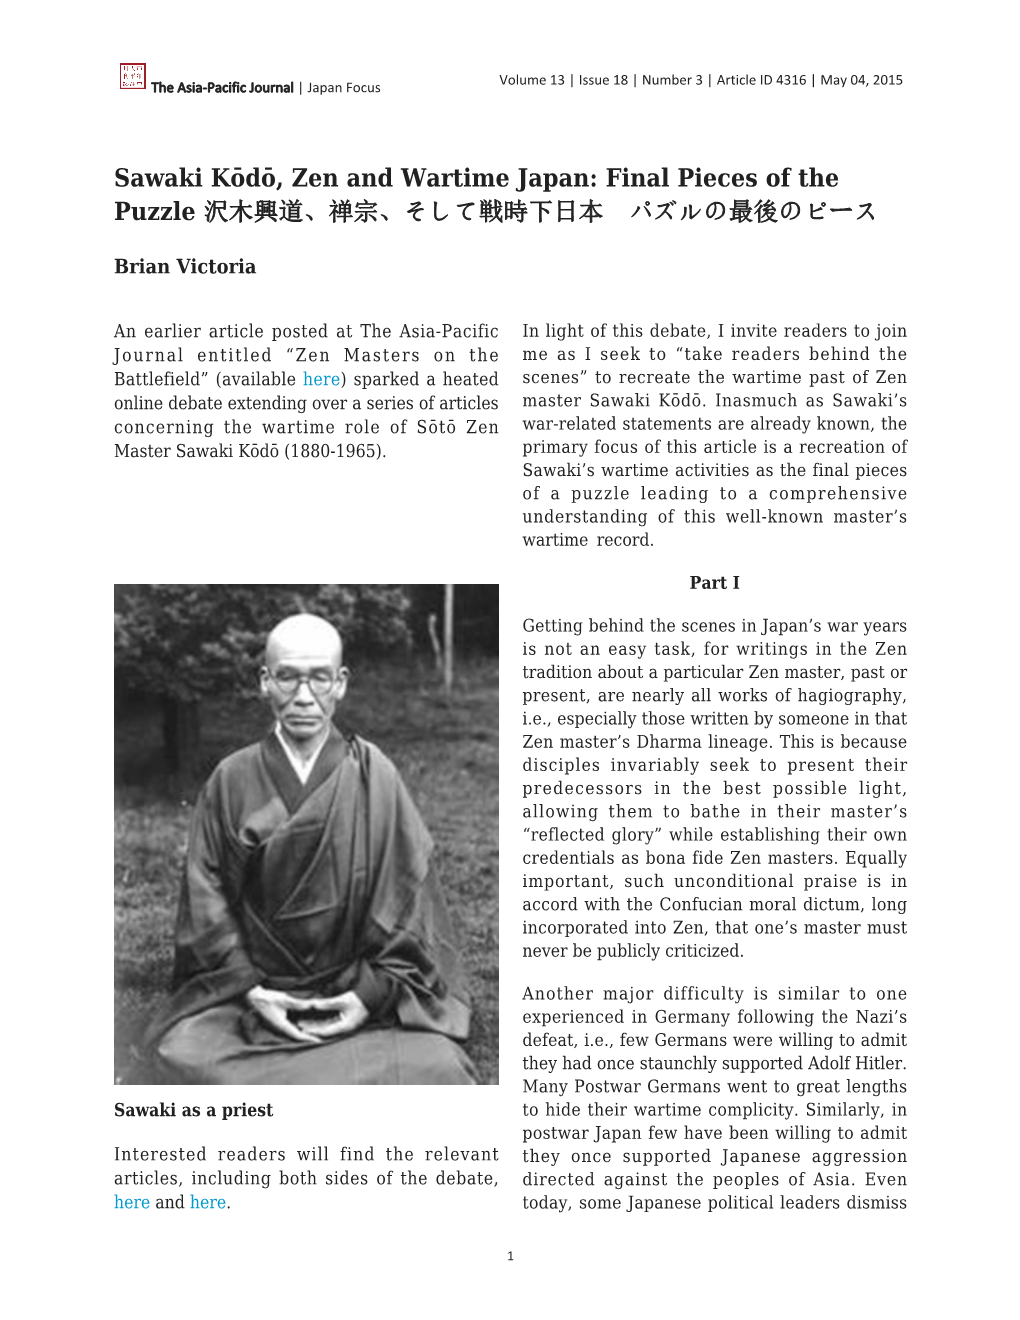 Sawaki Kōdō, Zen and Wartime Japan: Final Pieces of the Puzzle 沢木興道、禅宗、そして戦時下日本 パズルの最後のピース